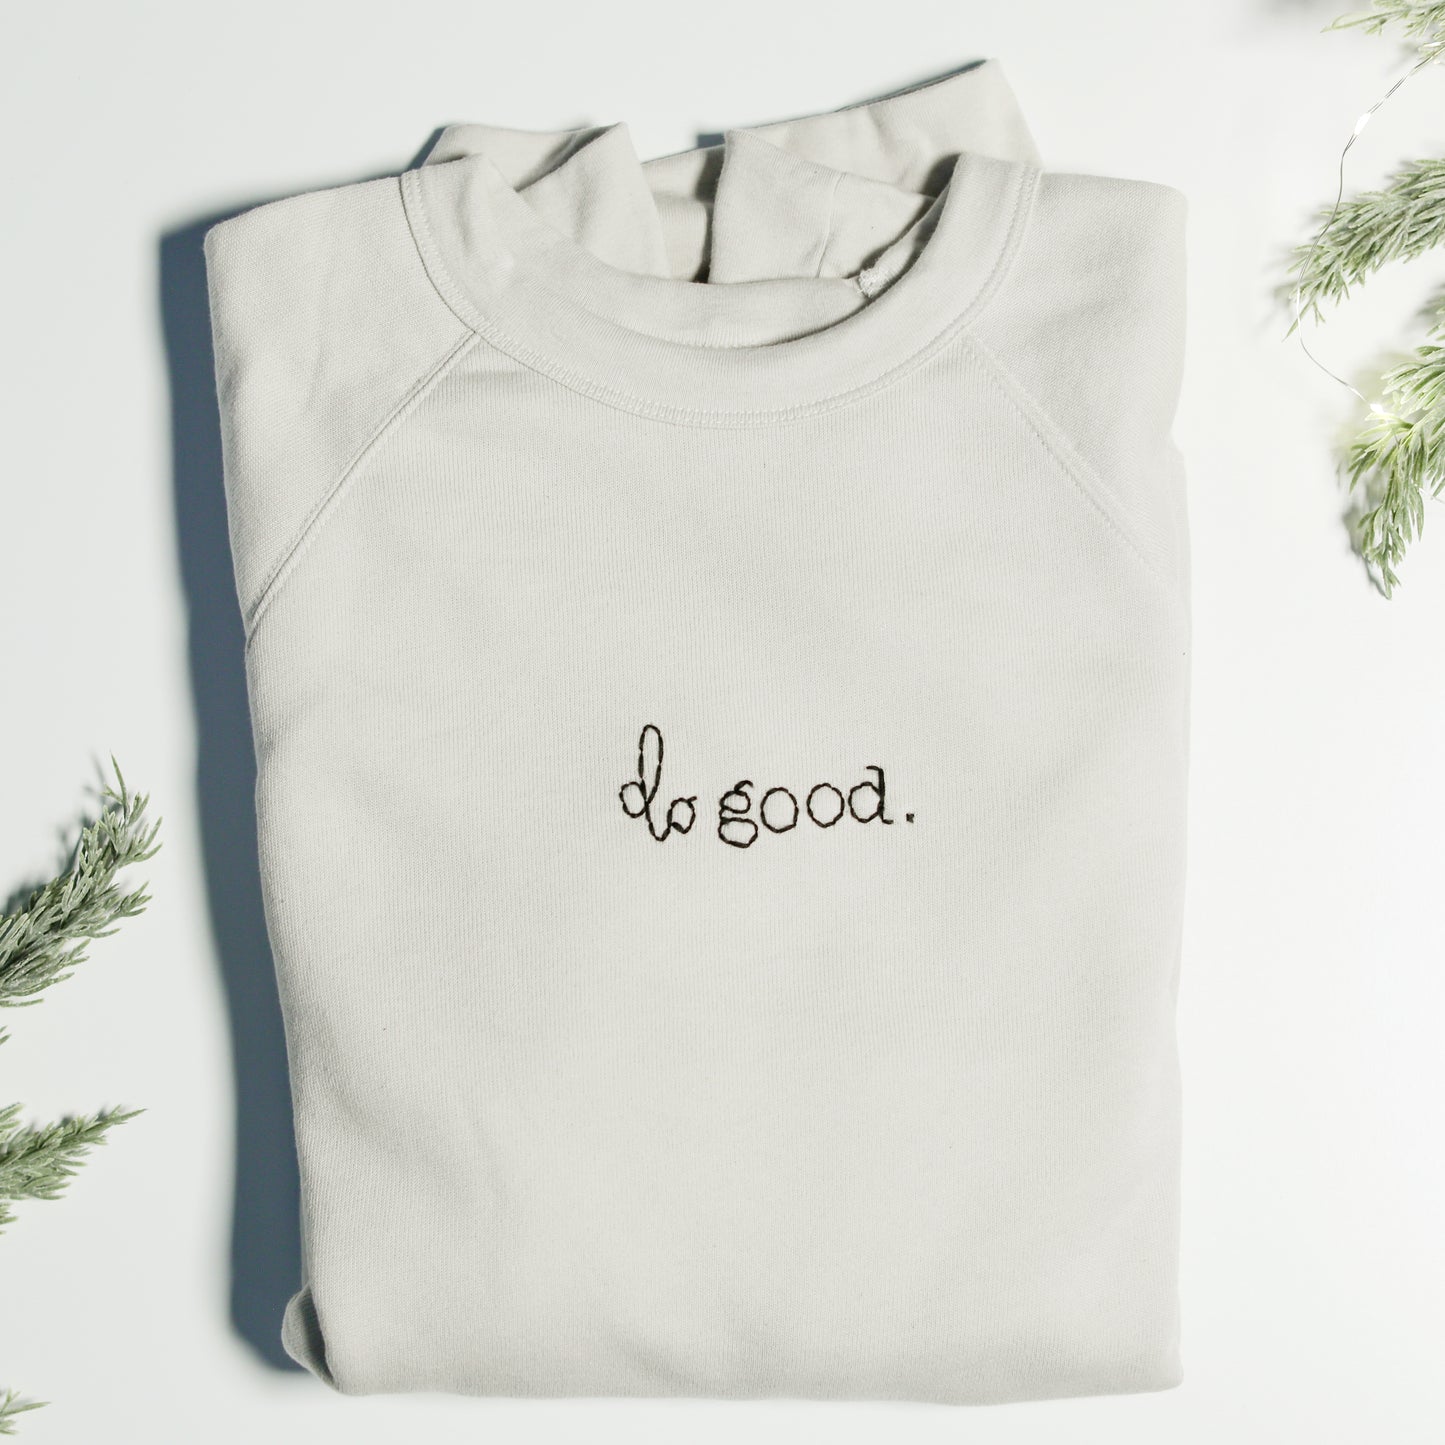 sand hand embroidered "do good" sweatshirt